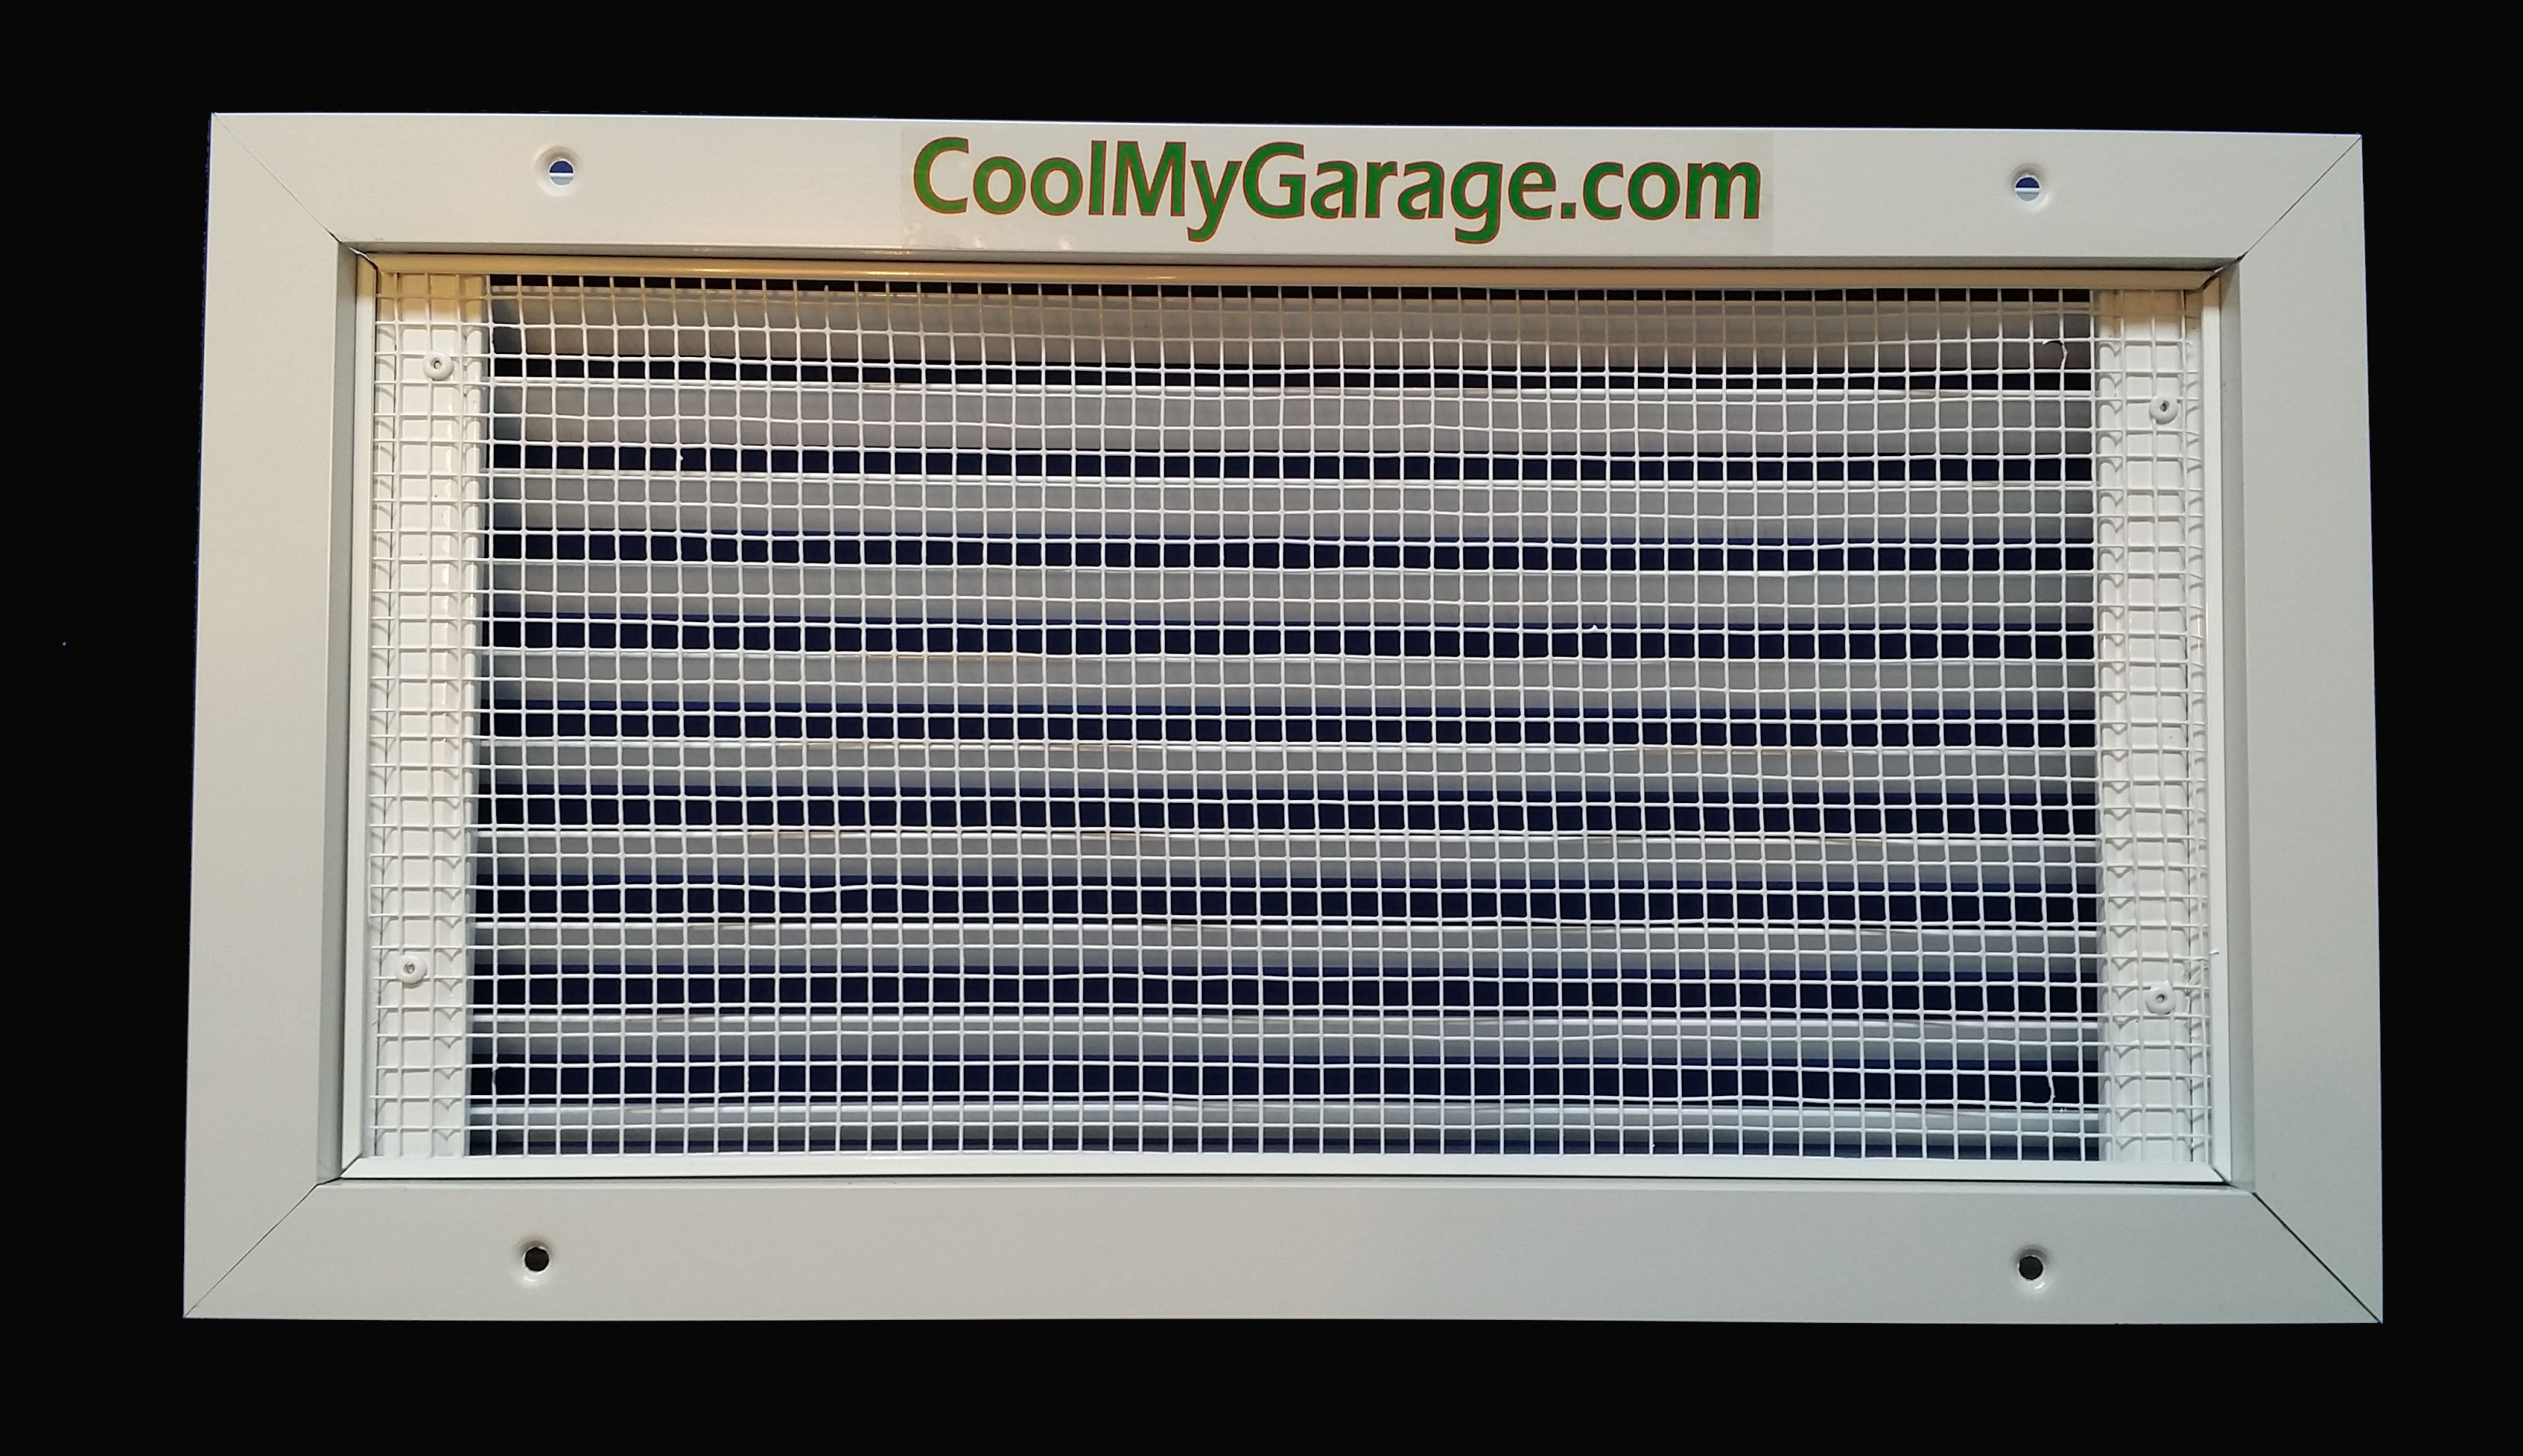 grille ventilation garage - www.optuseducation.com.